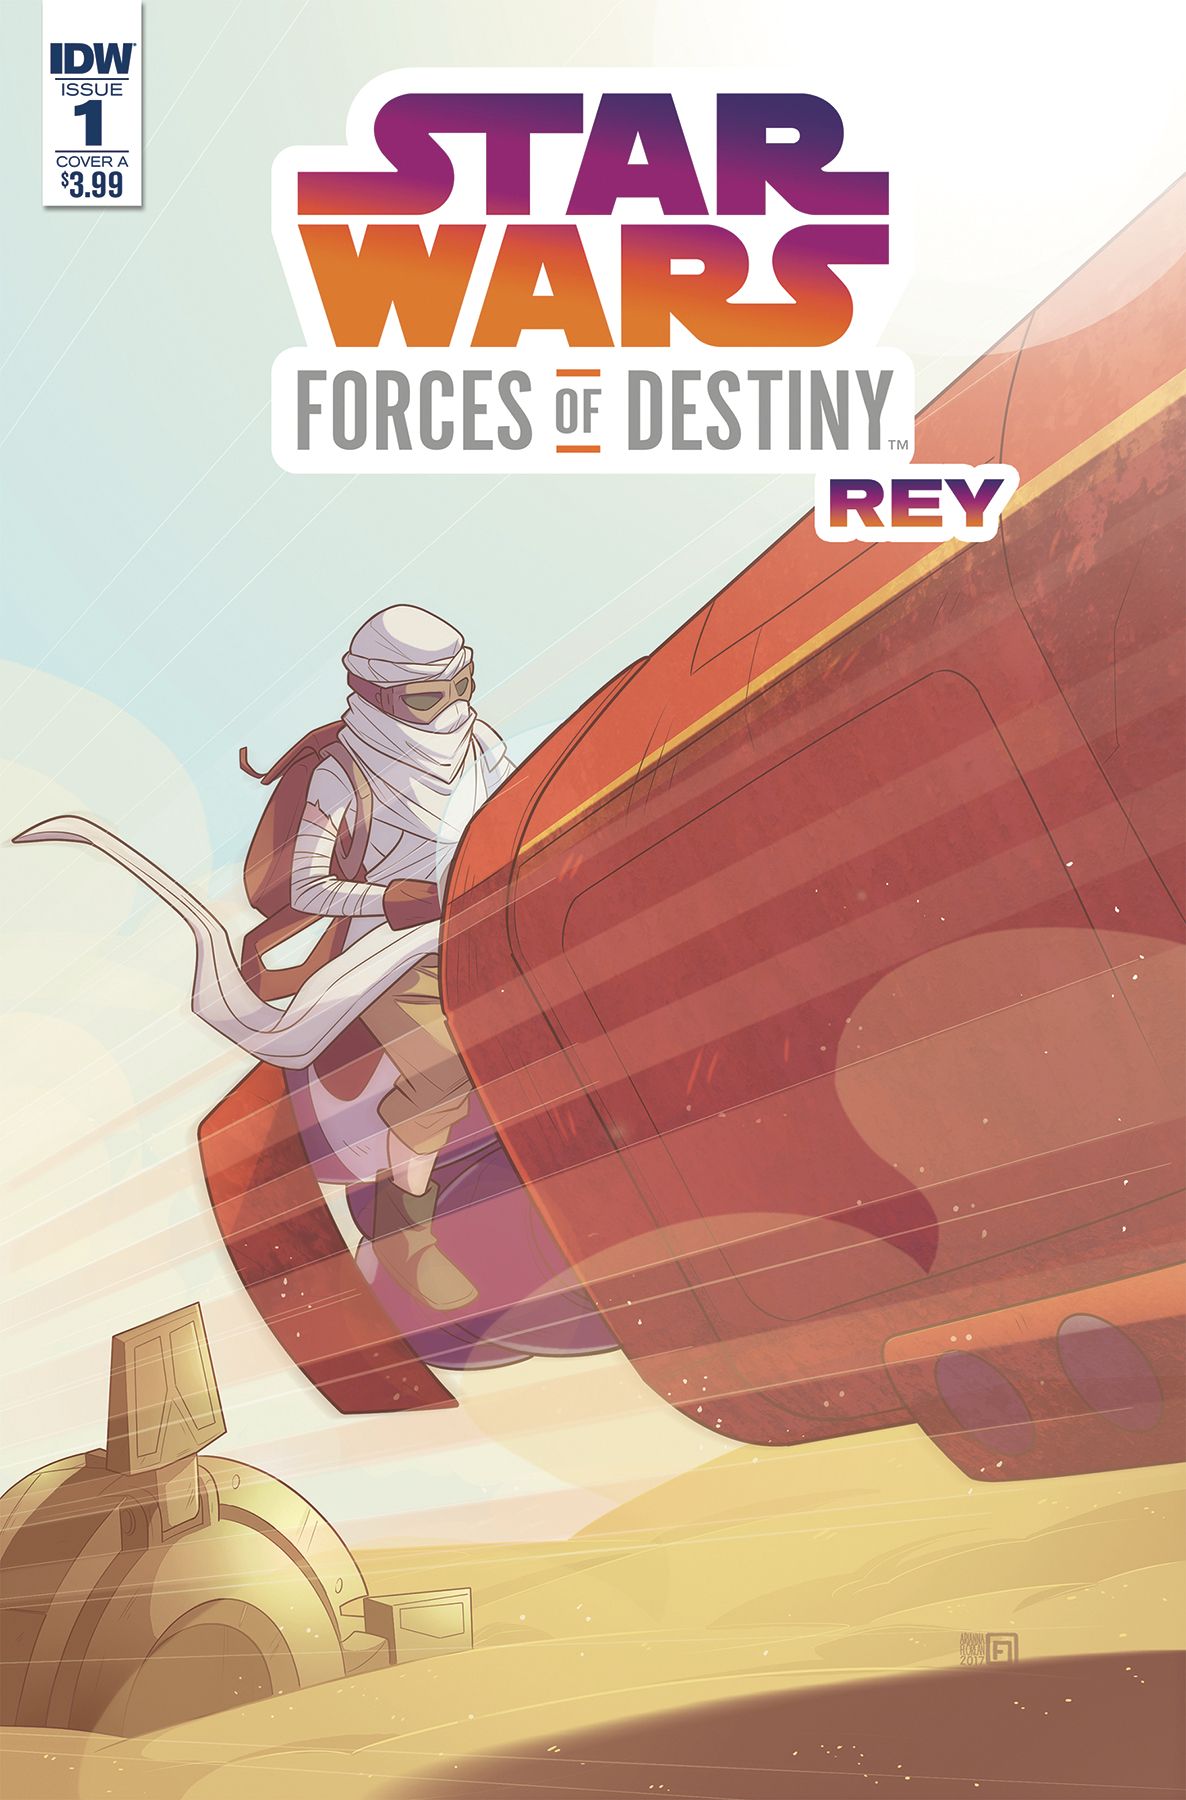 Star Wars Forces of Destiny - Rey #1 Comic